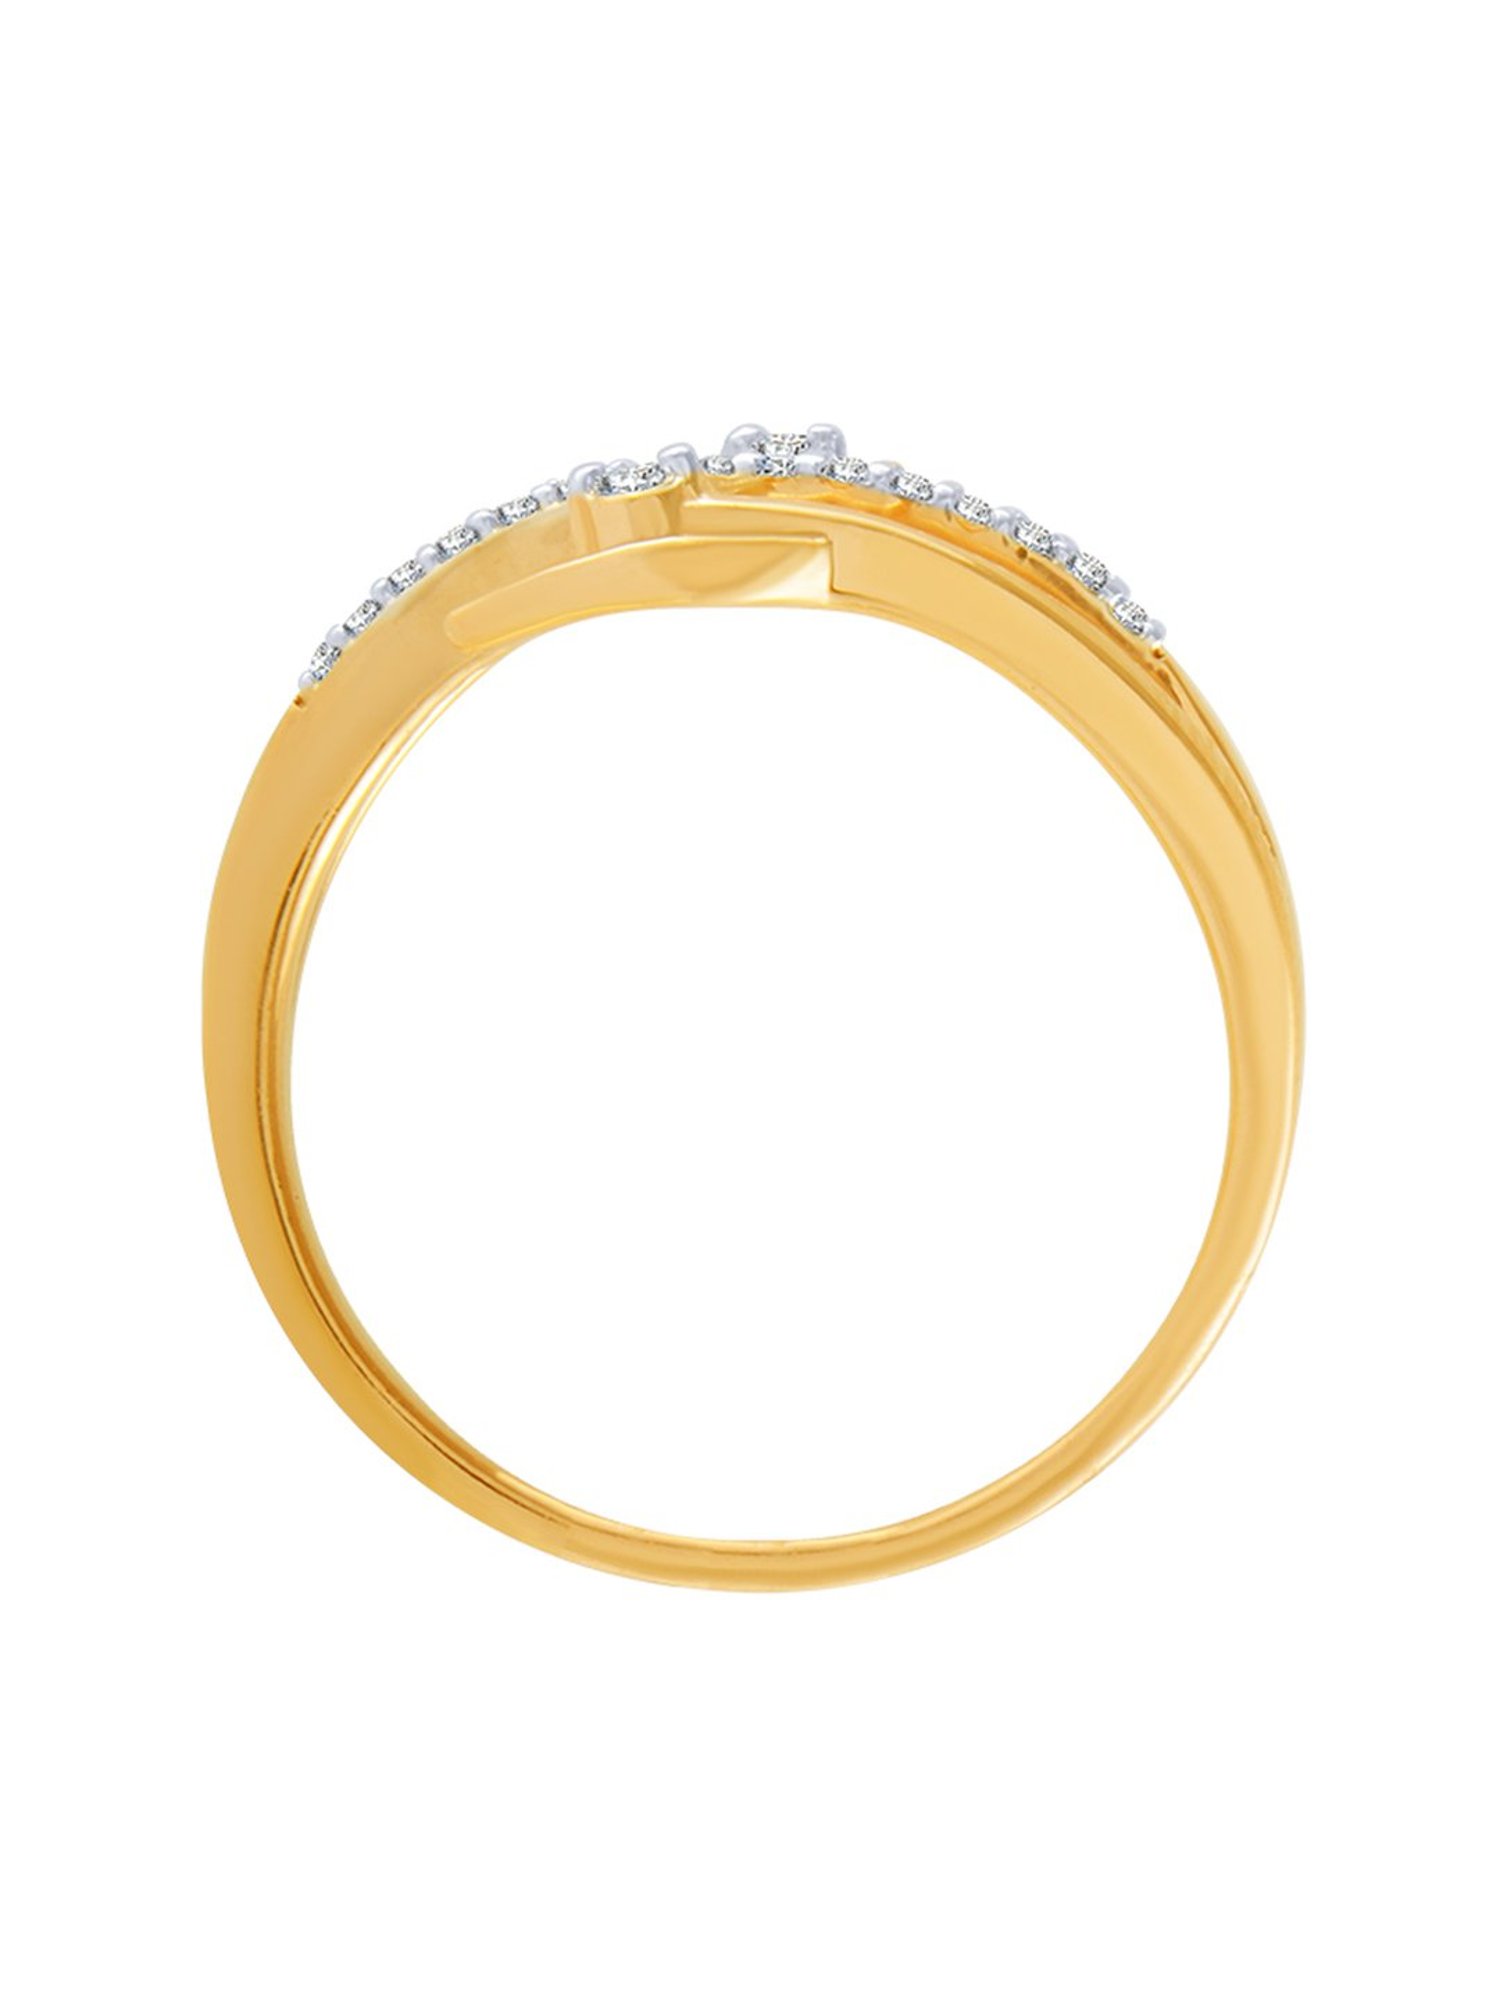 Buy Diamond Rings Online - Shop Diamond Engagement Rings for Women at PC  Chandra